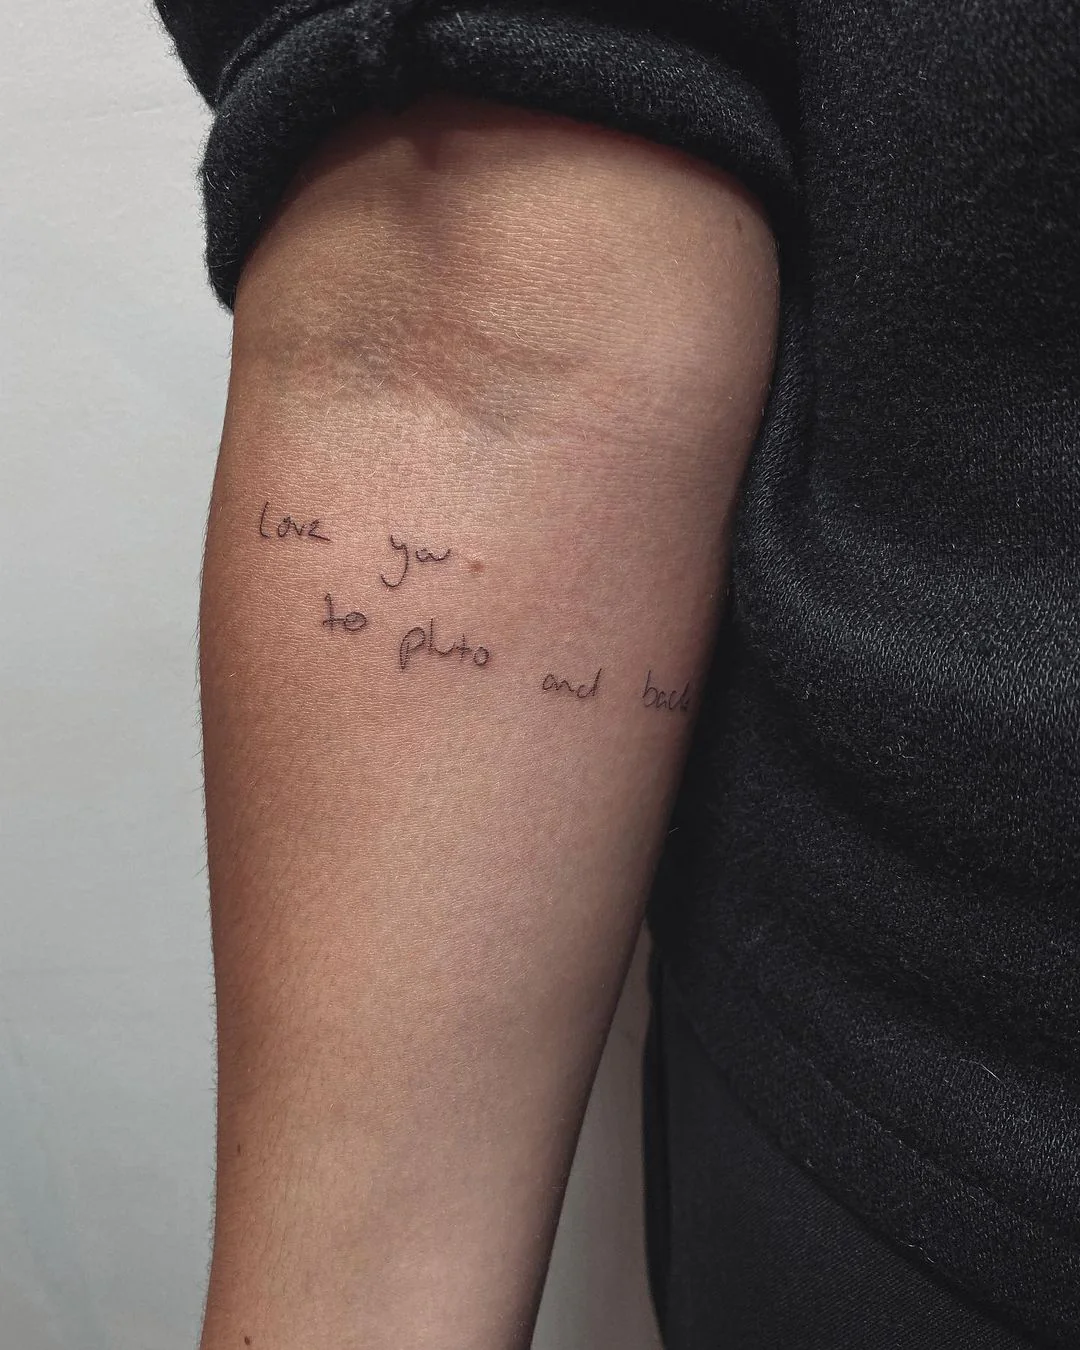 Fine line tattoo by Urban Retreat, London.